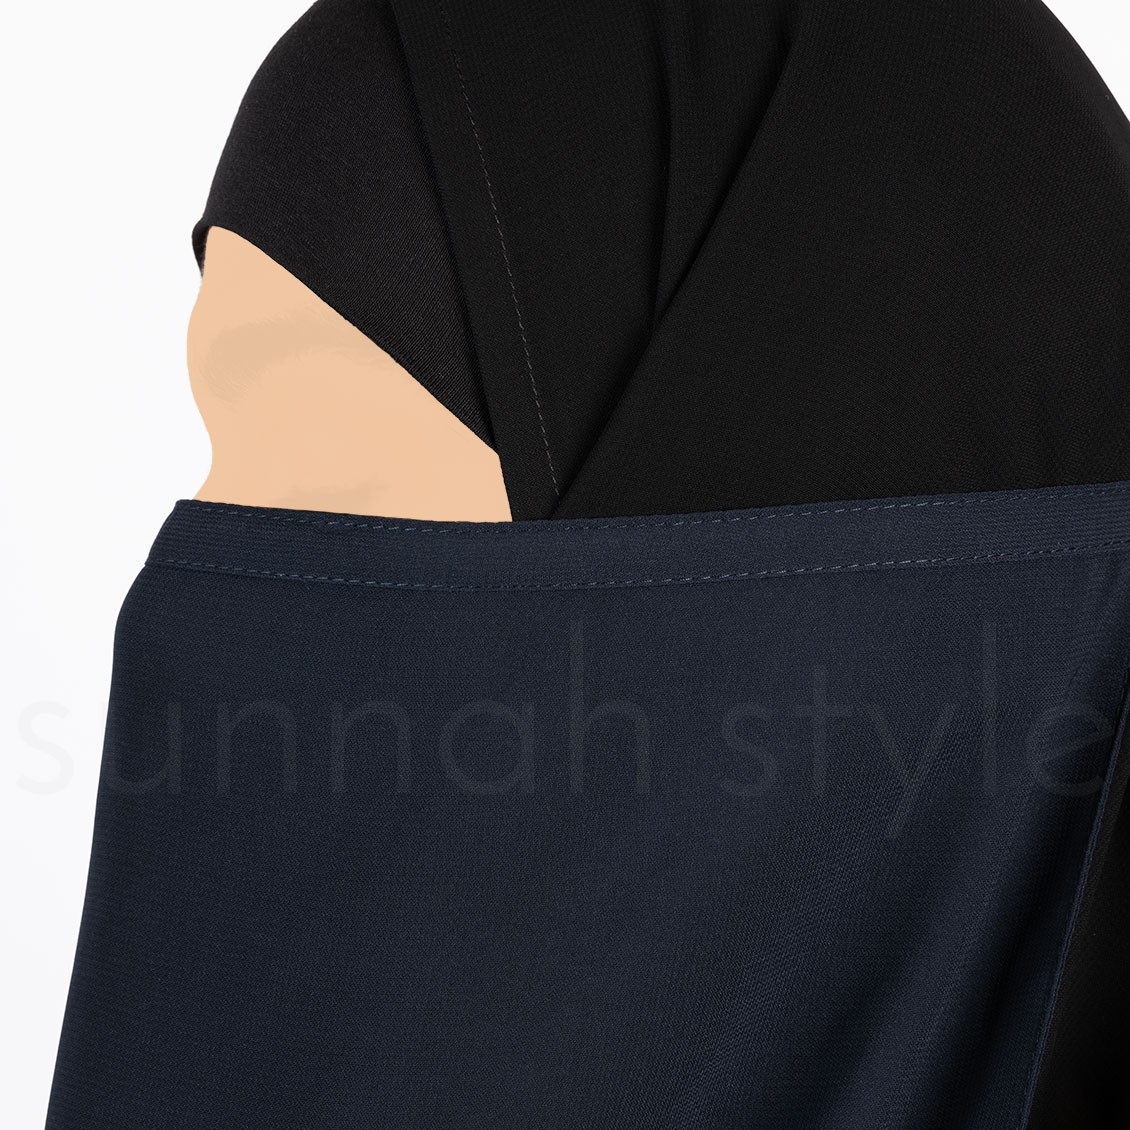 Sunnah Style Tying Half Niqab Navy Blue